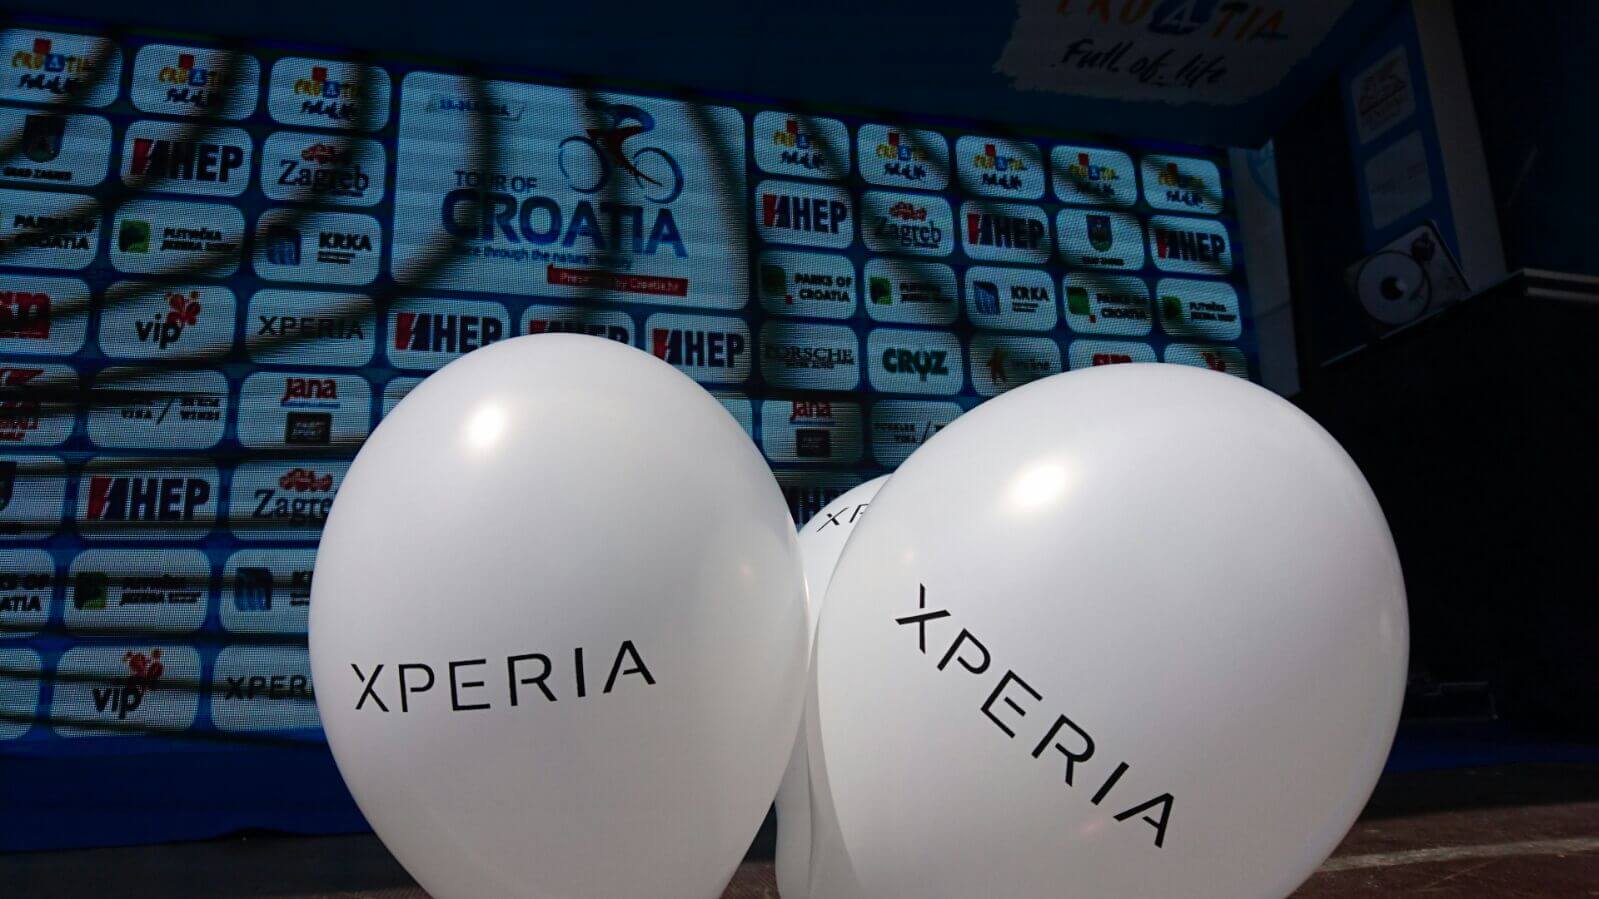 Sony Xperia Tour of Croatia dekoracije